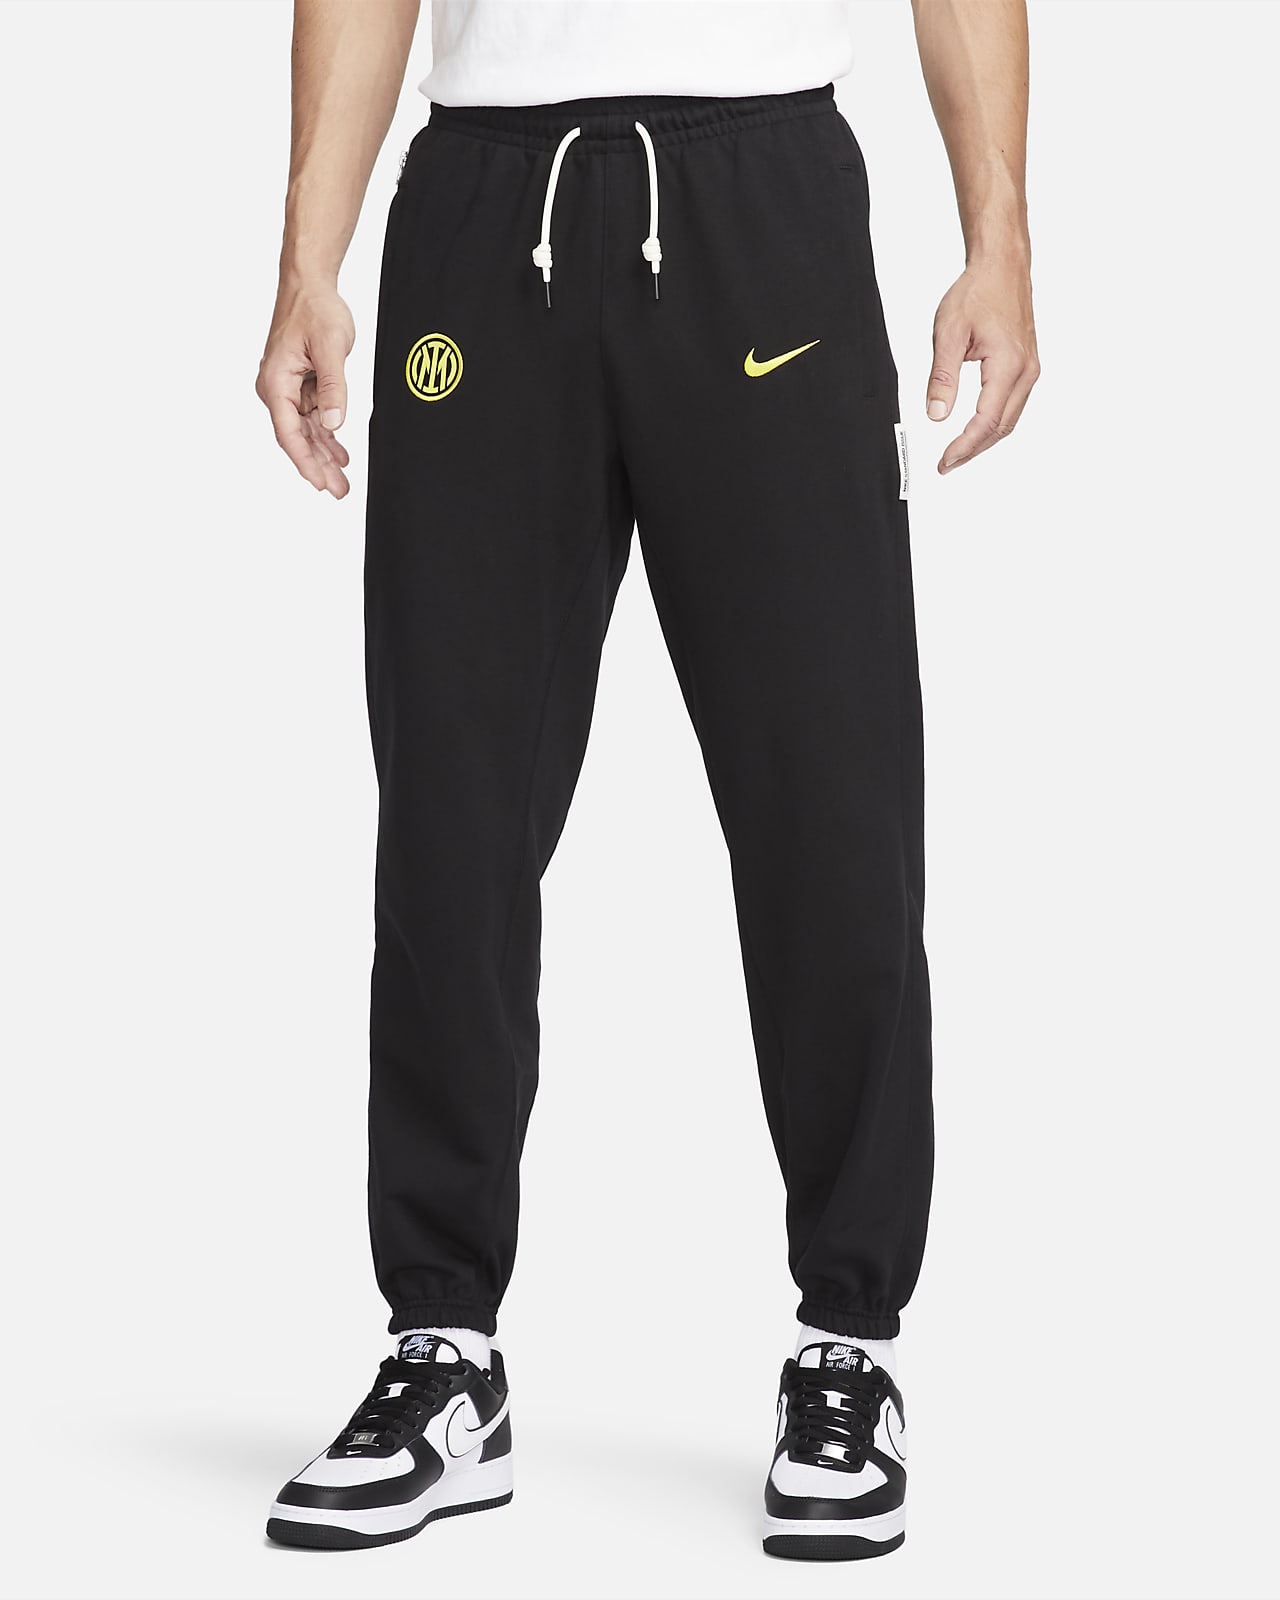 Inter Milan Standard Issue Men's Nike Football Pants